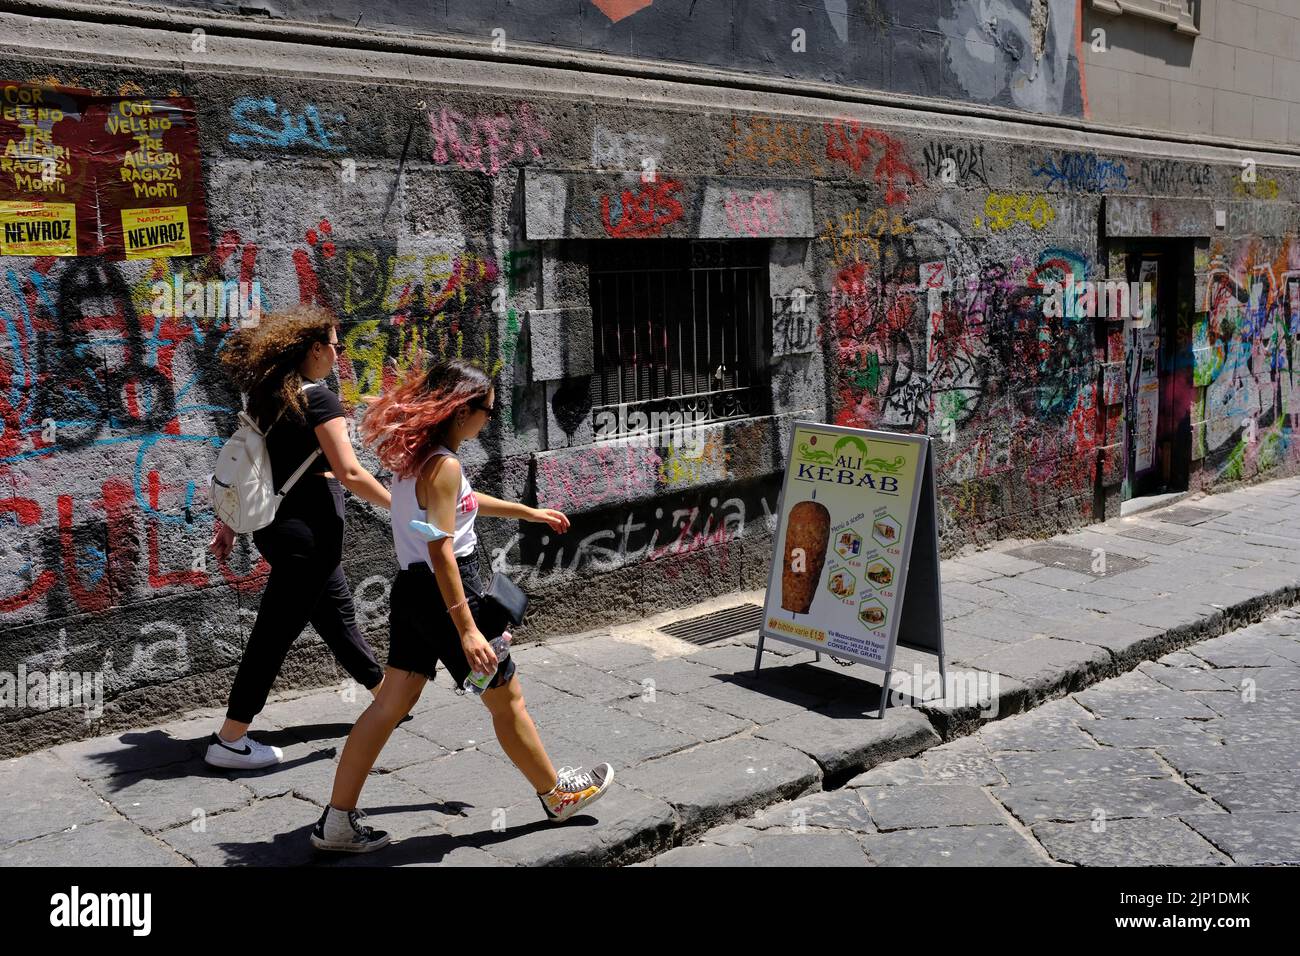 Two females walking past graffiti in Naples, Napoli, Italy Stock Photo